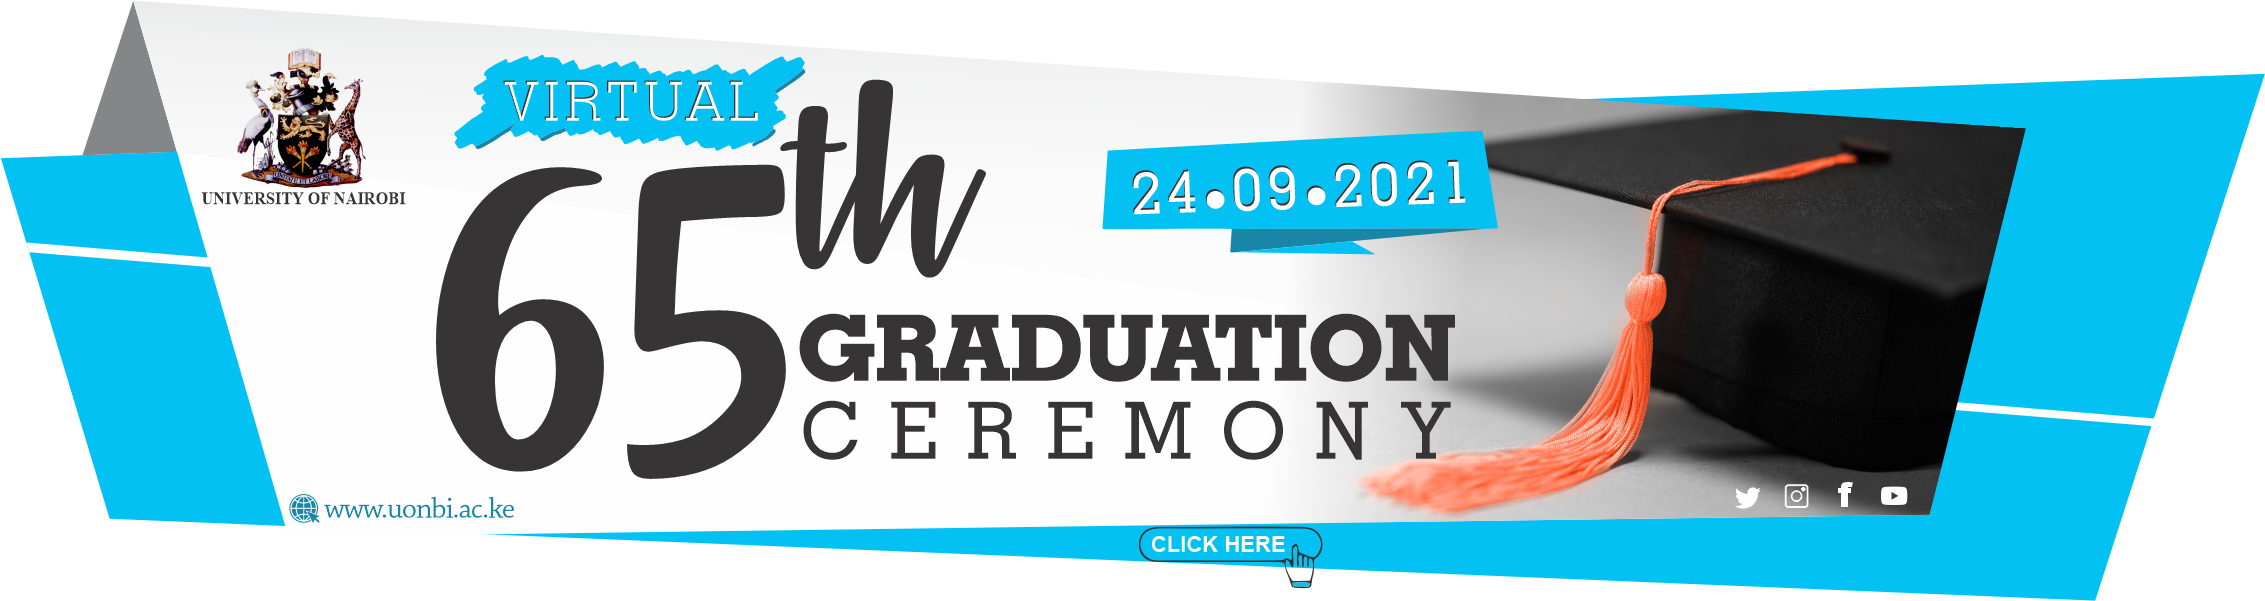 65TH Graduation Ceremony 